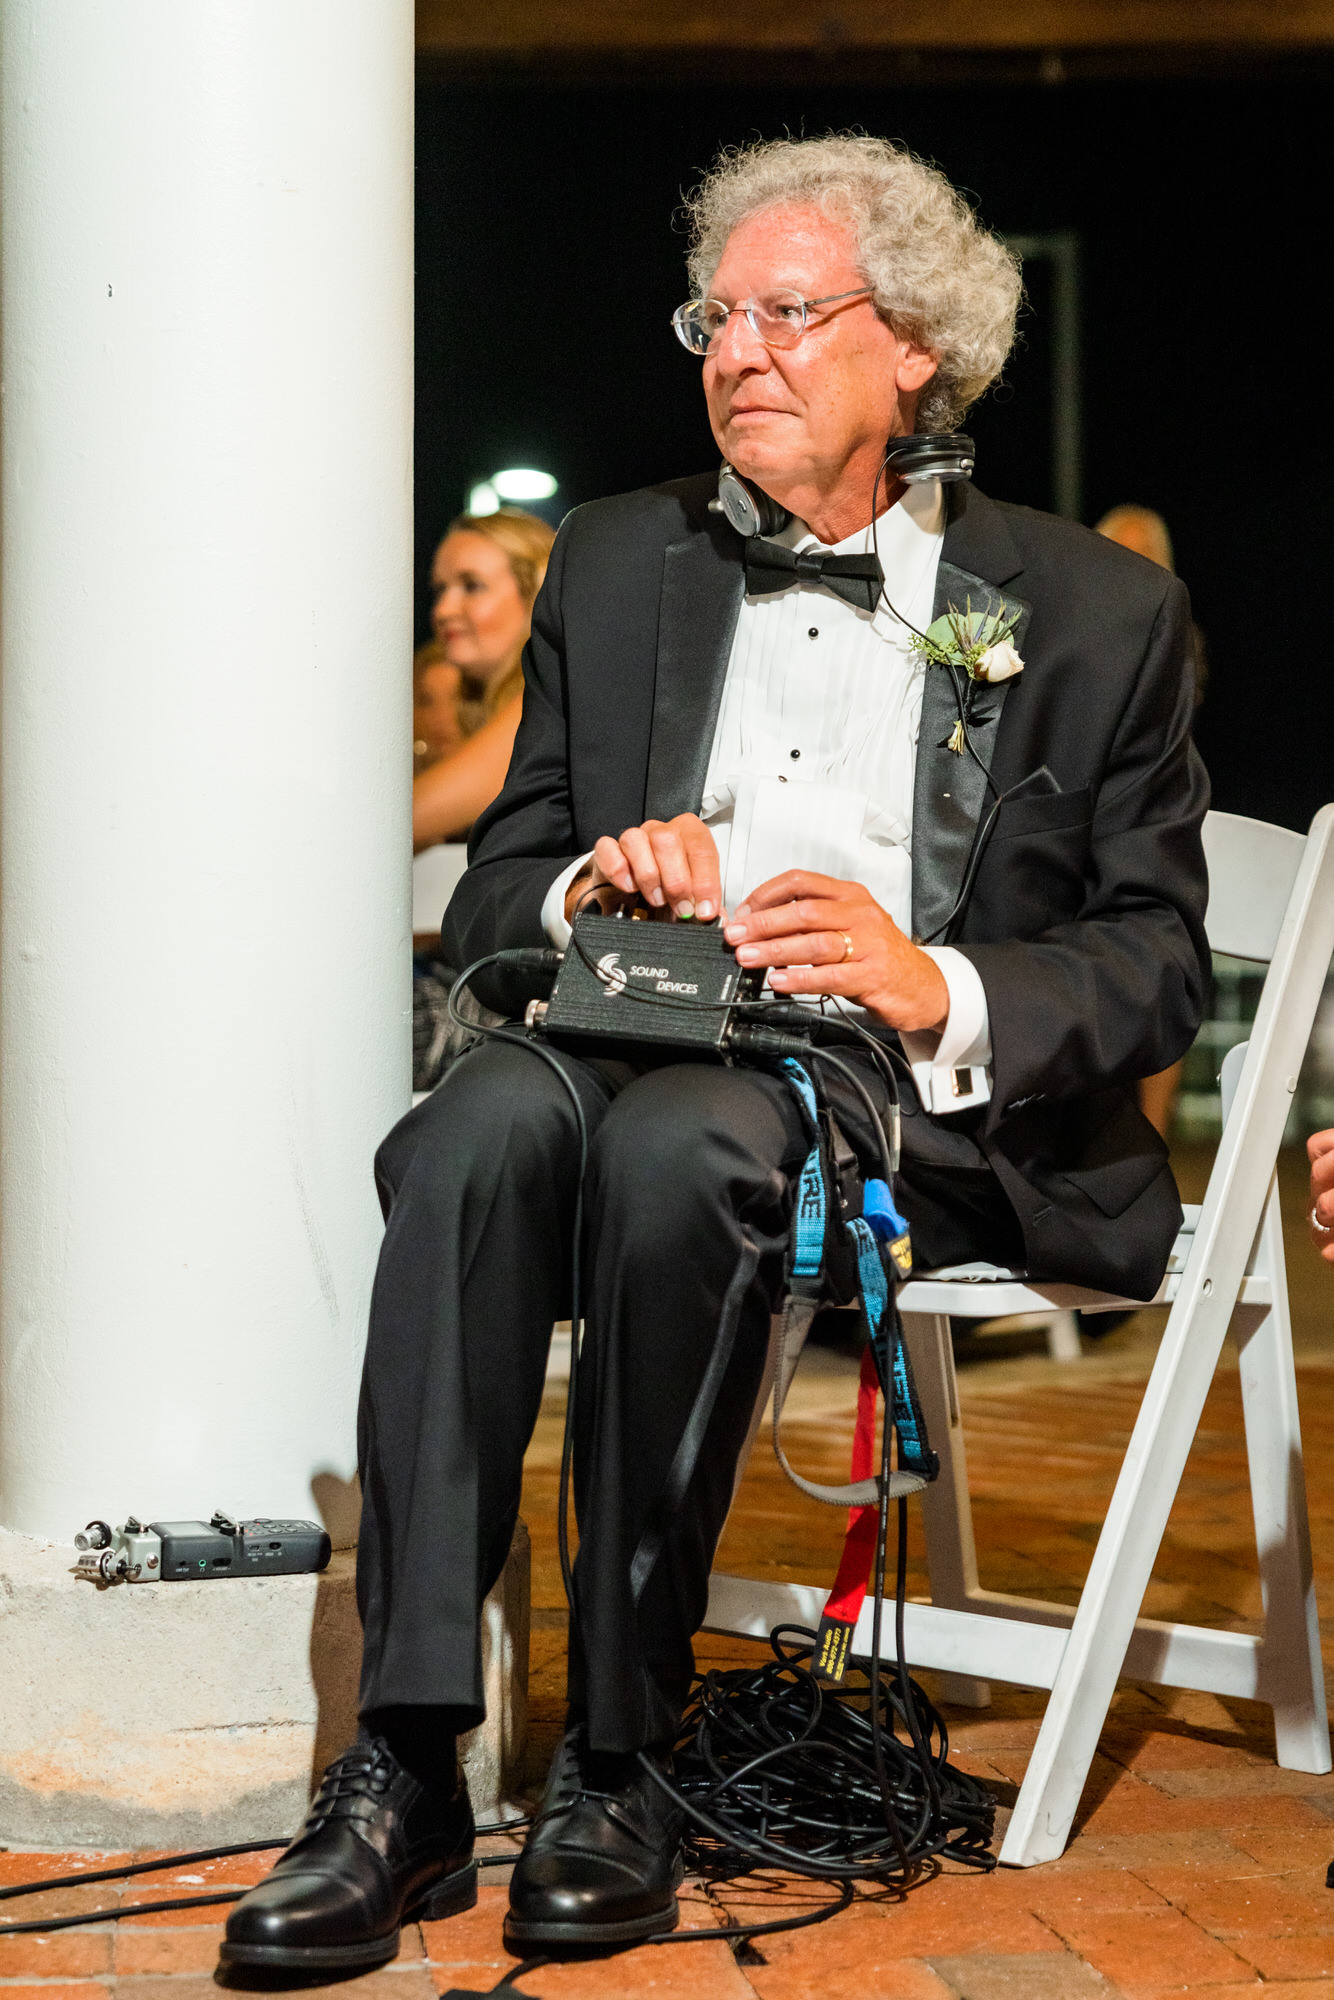 older man sitting in chair during wedding reception